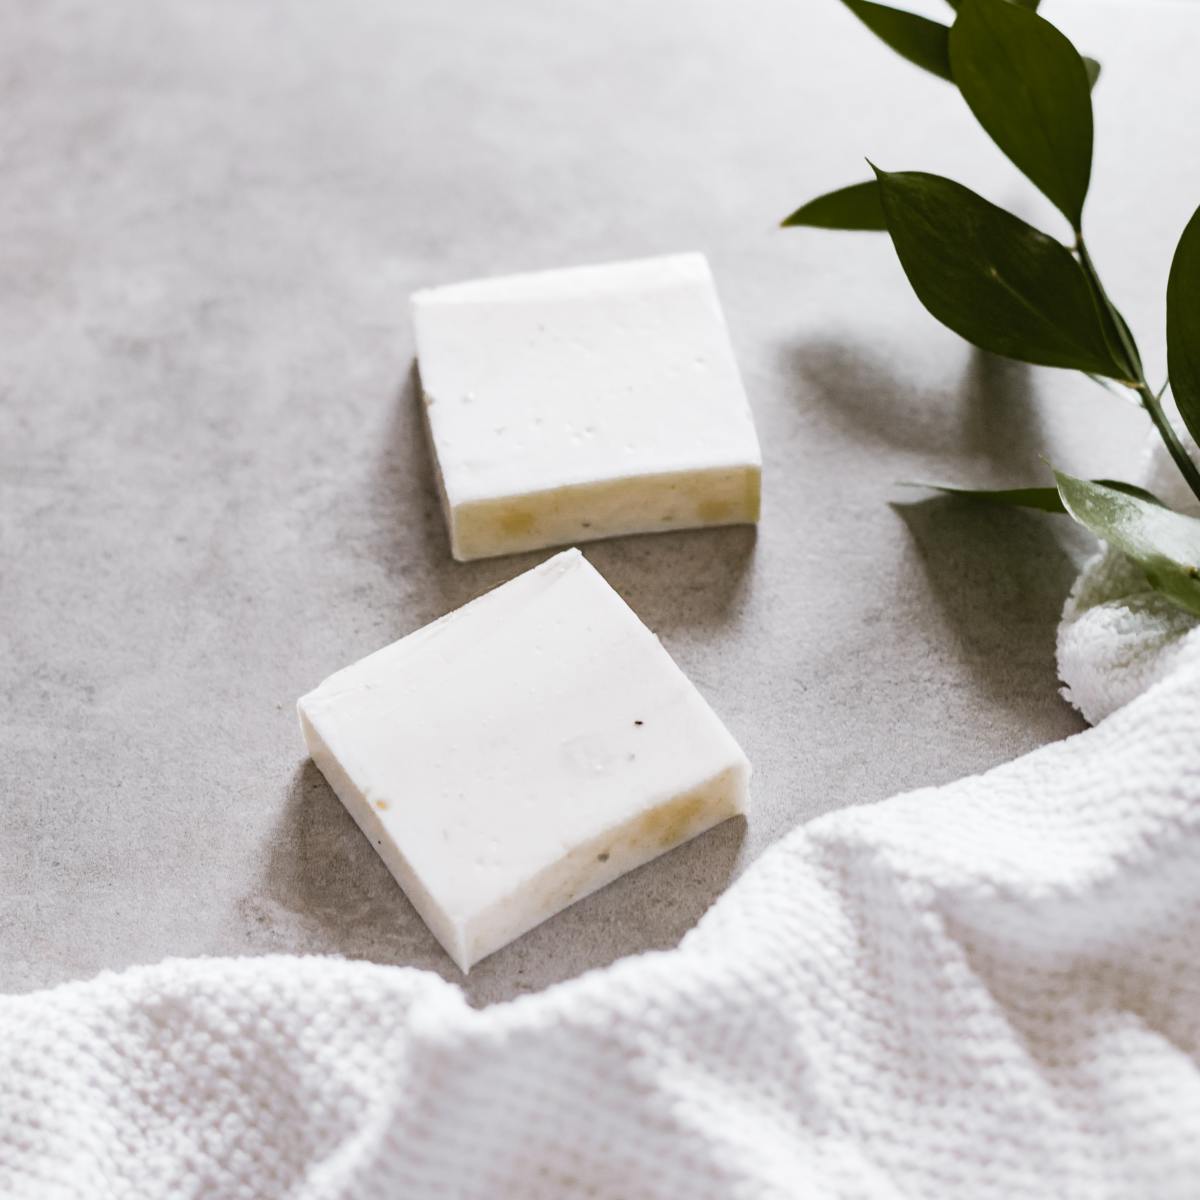 15 Shea Butter Soap Benefits